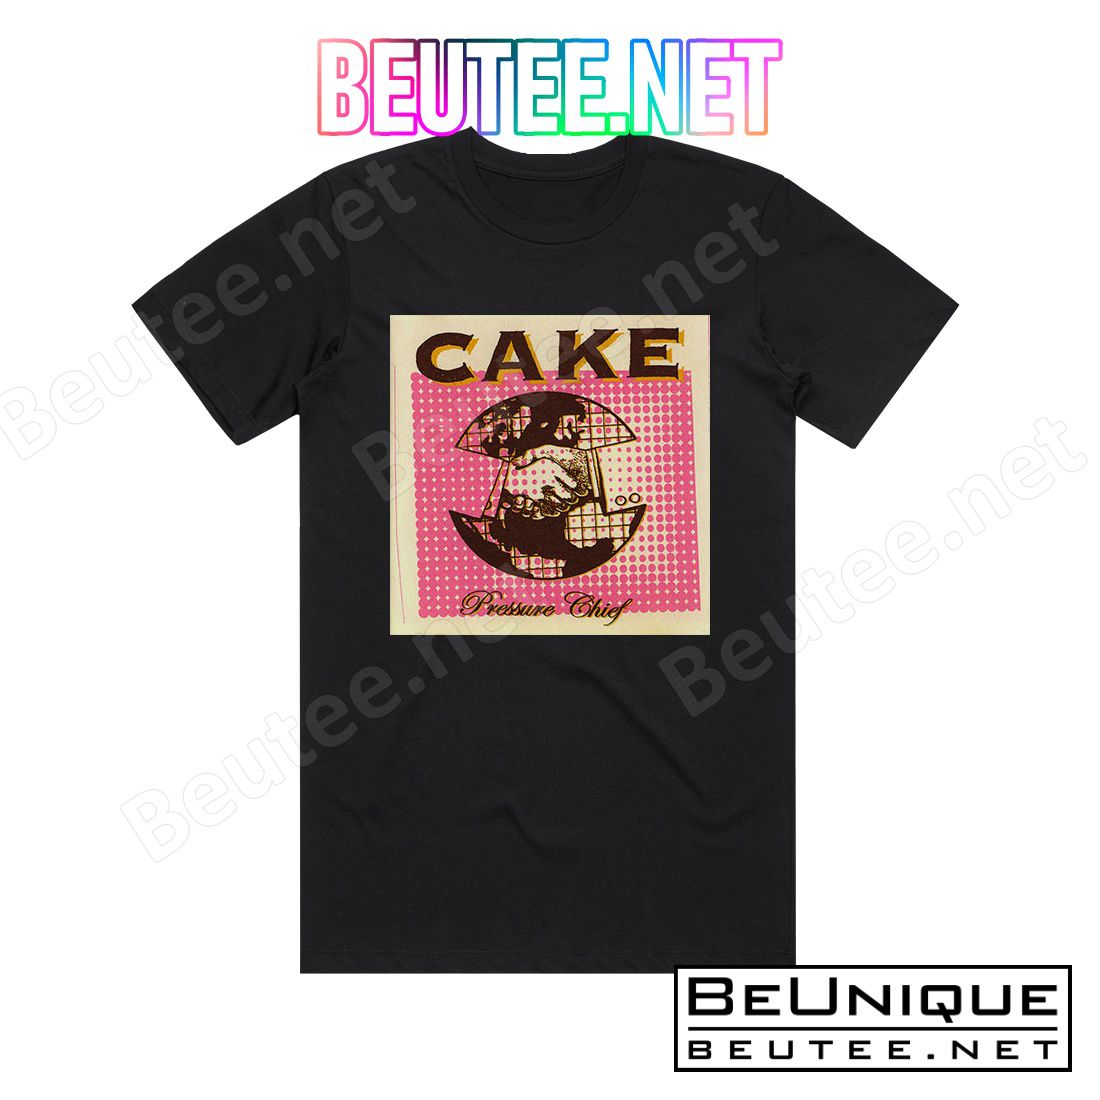 Cake Pressure Chief 3 Album Cover T-Shirt